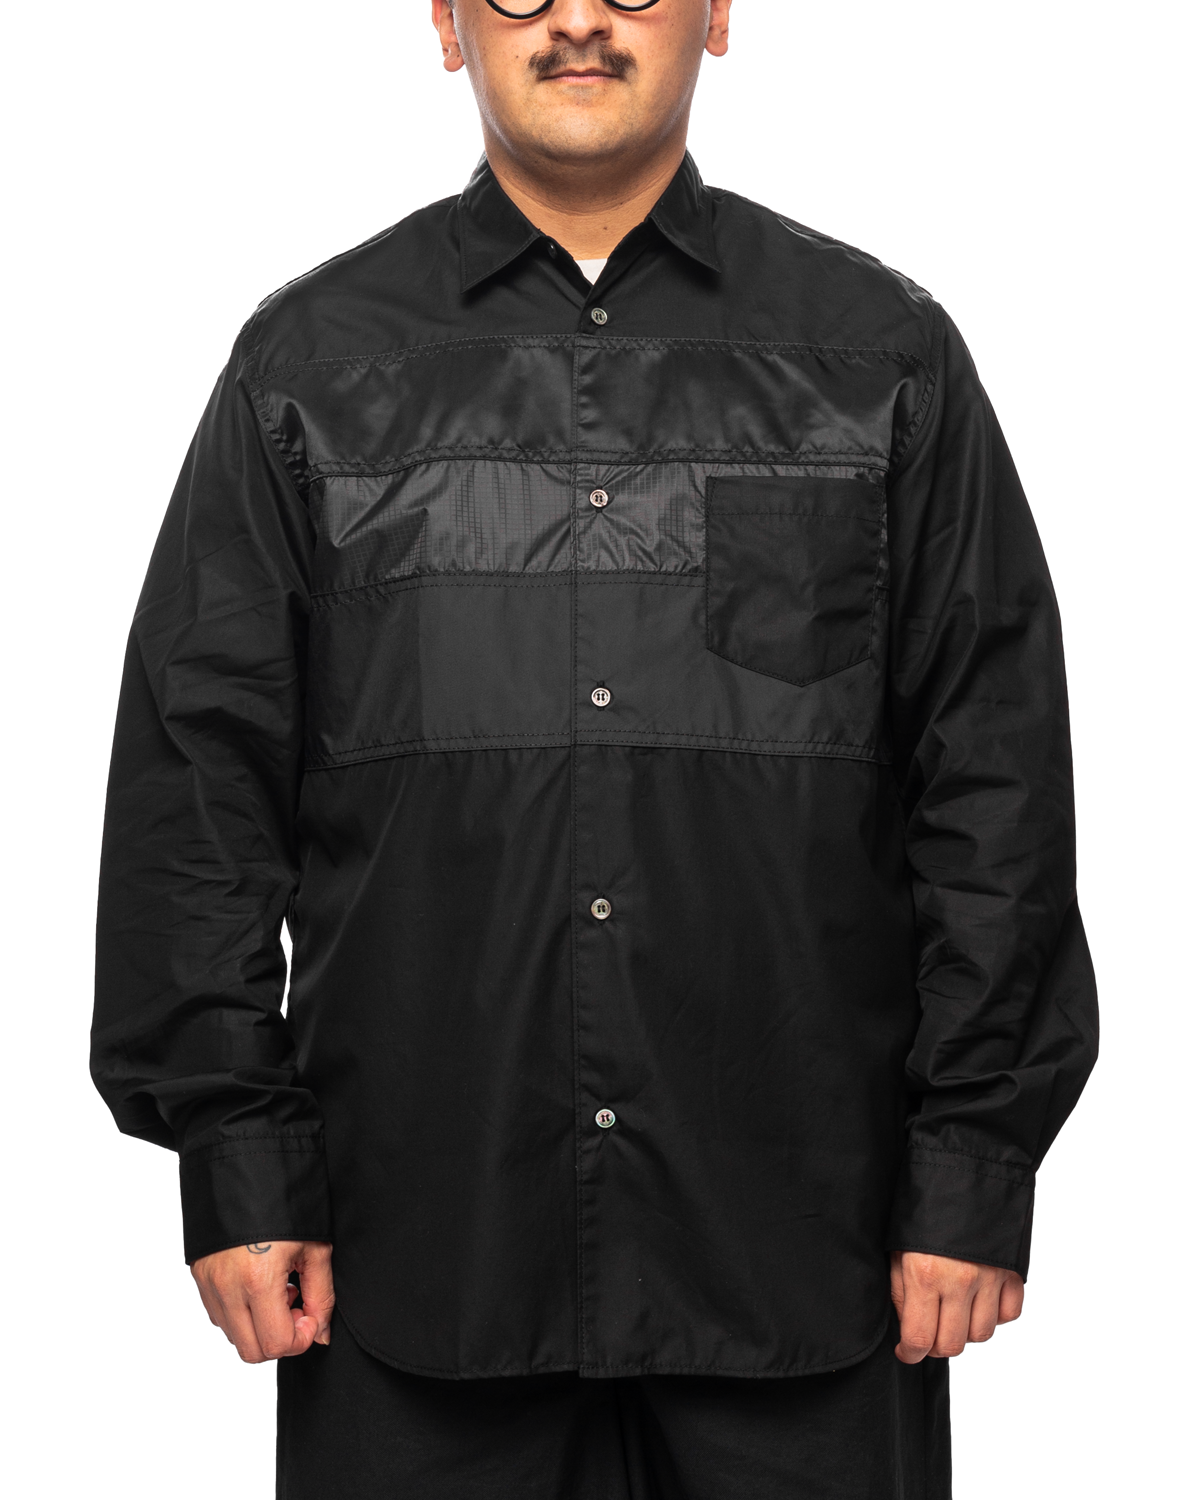 Men's Shirt Black Multi Fabric Mix HL-B001-051